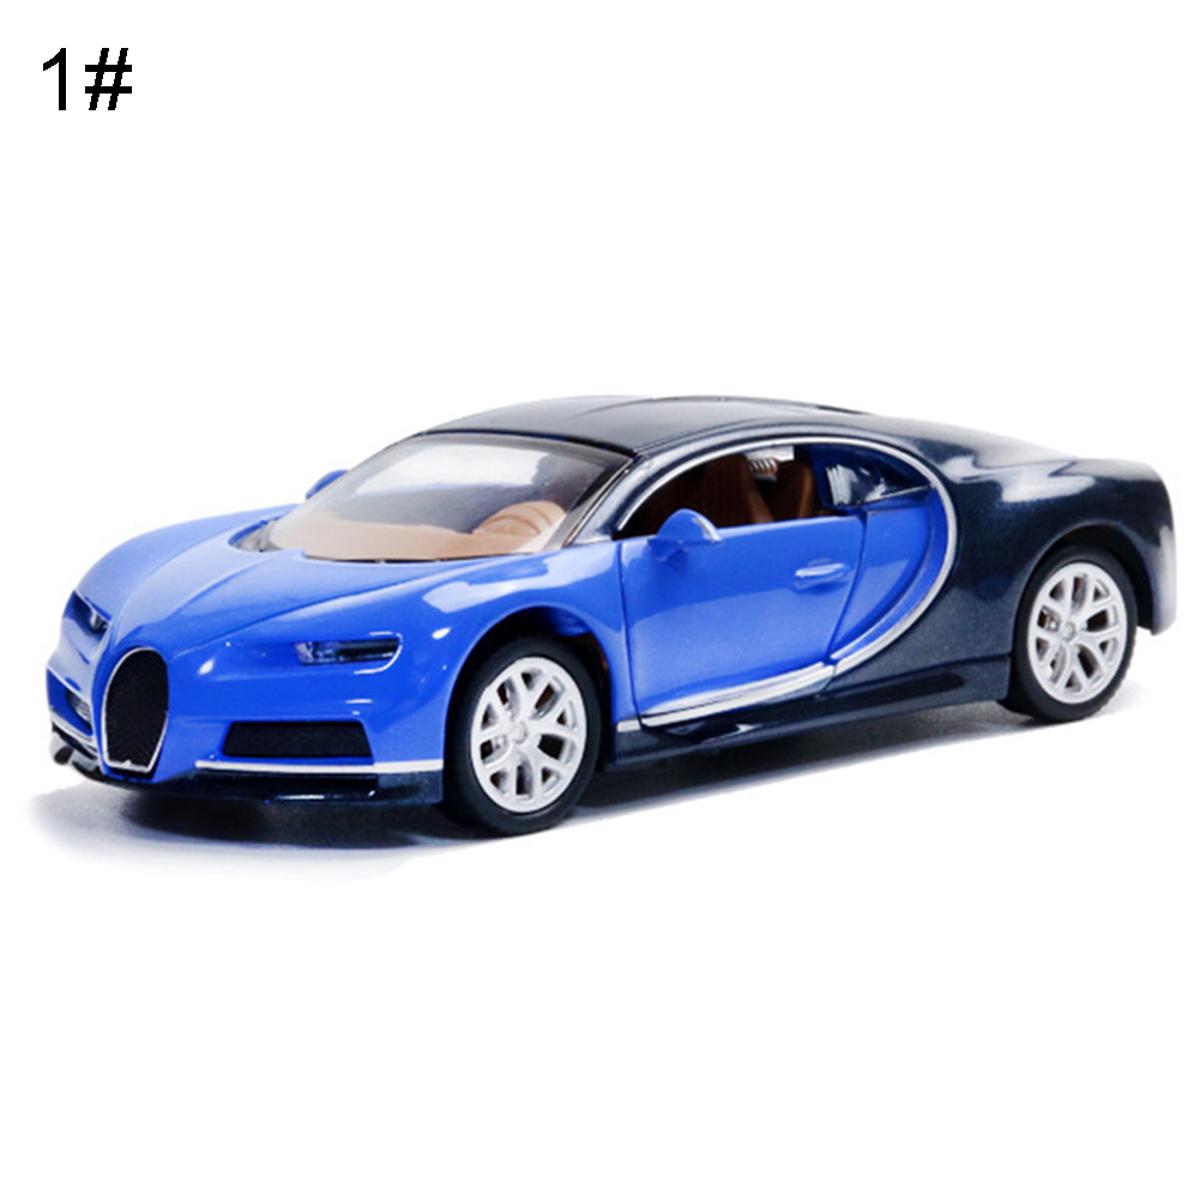 Fondant Bugatti Divo Car | Topper Cake | Fondant Design Ideas - YouTube